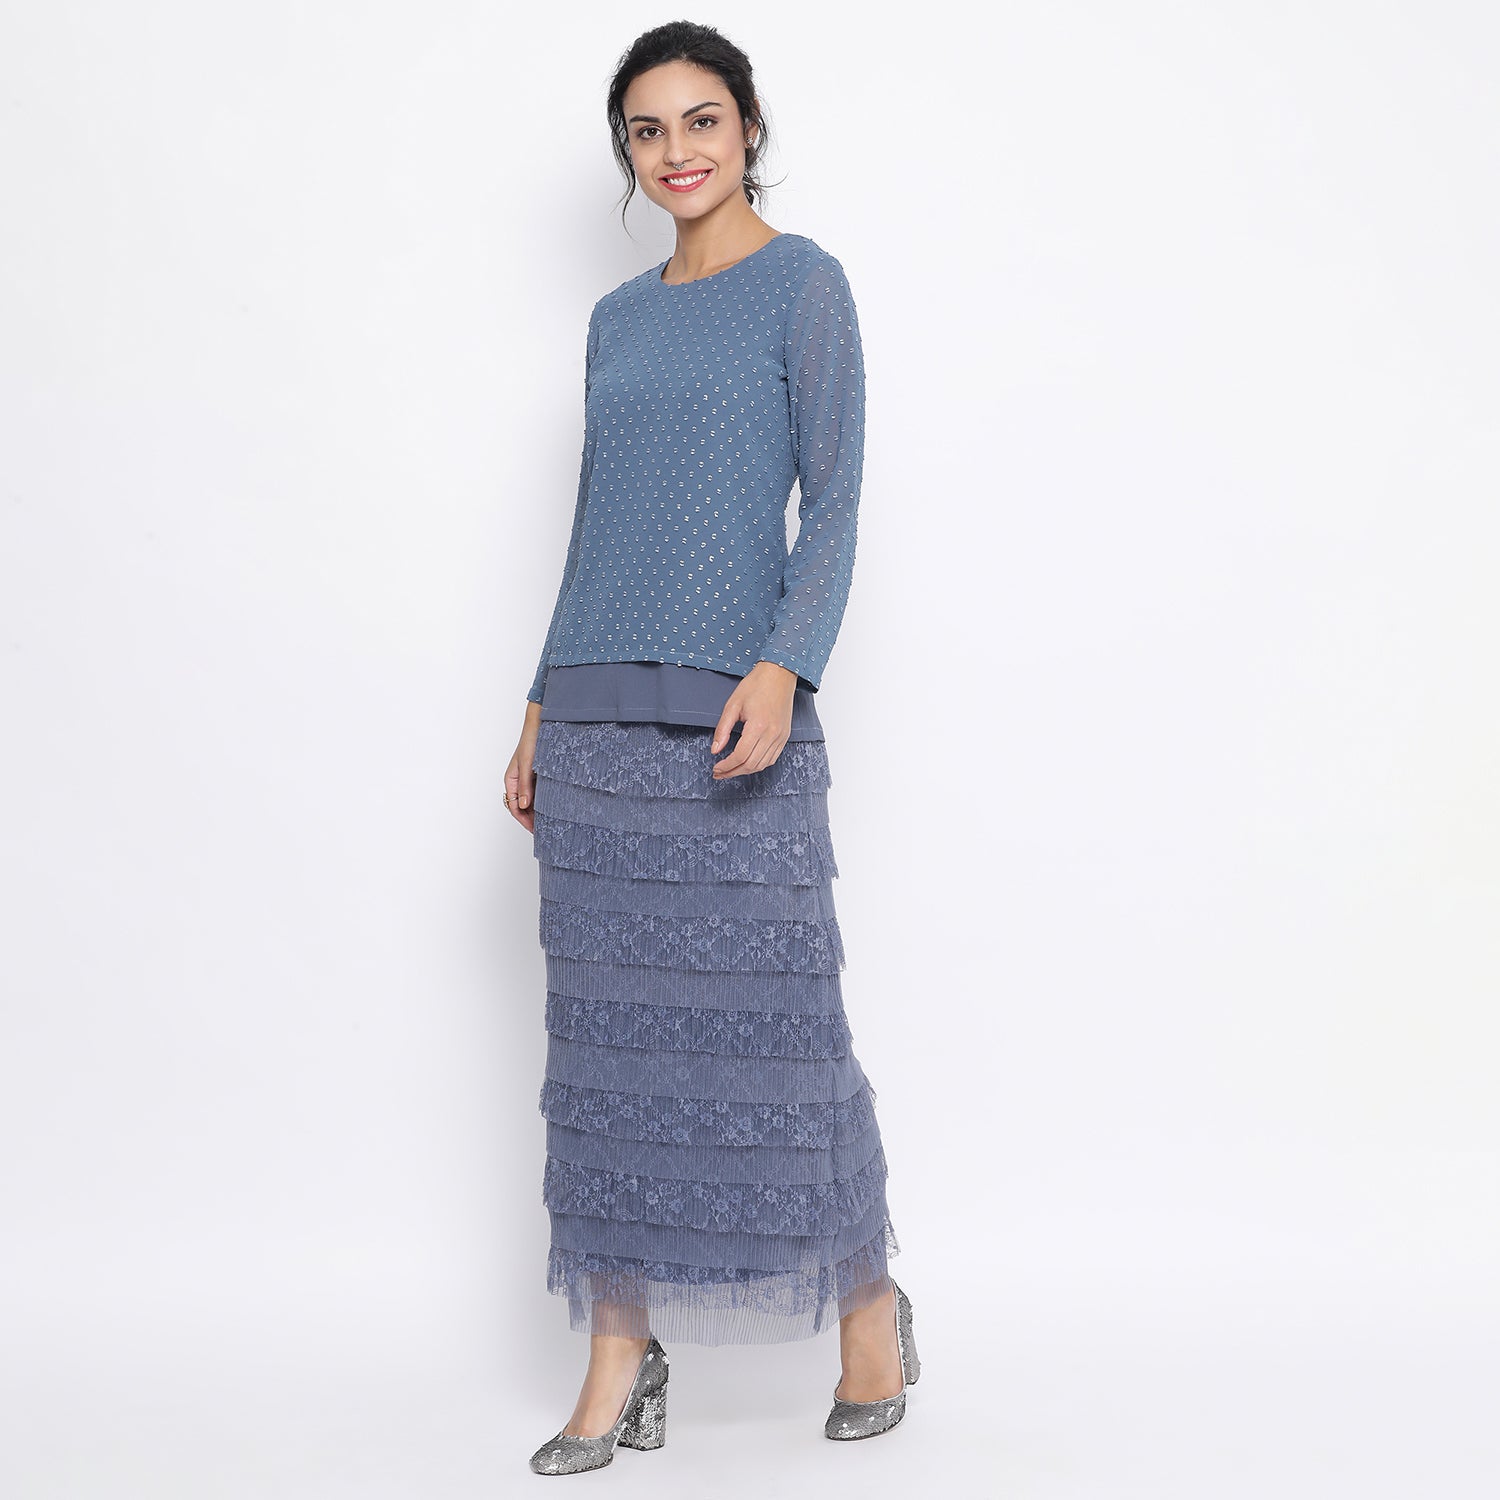 Stone Blue Lace Frill Net Skirt